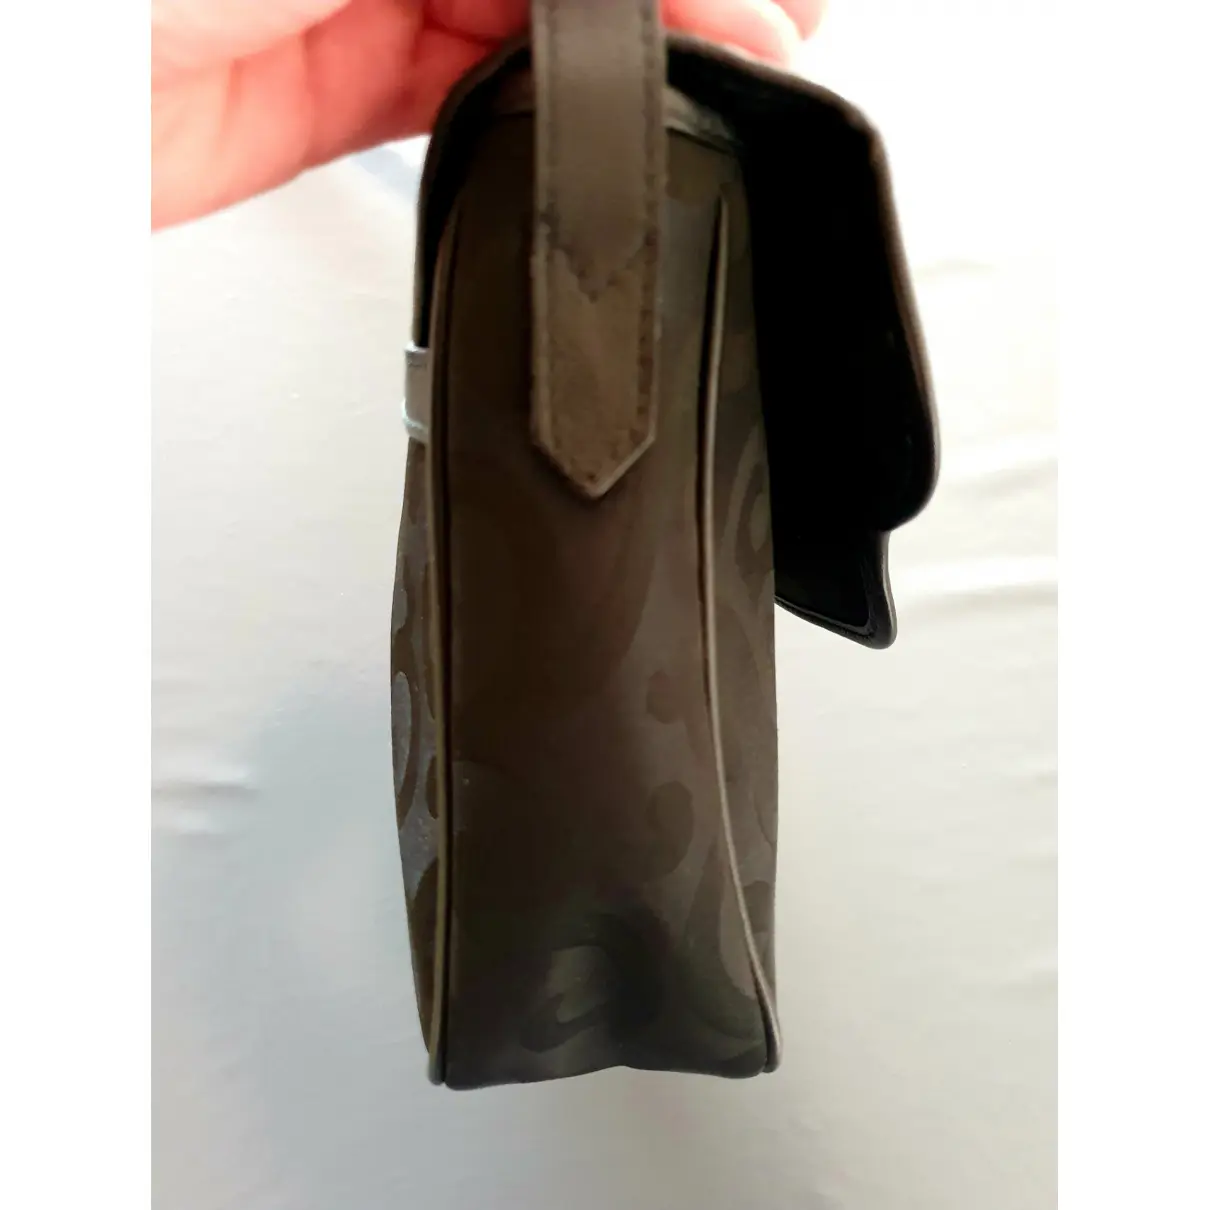 Buy Yves Saint Laurent Silk crossbody bag online - Vintage